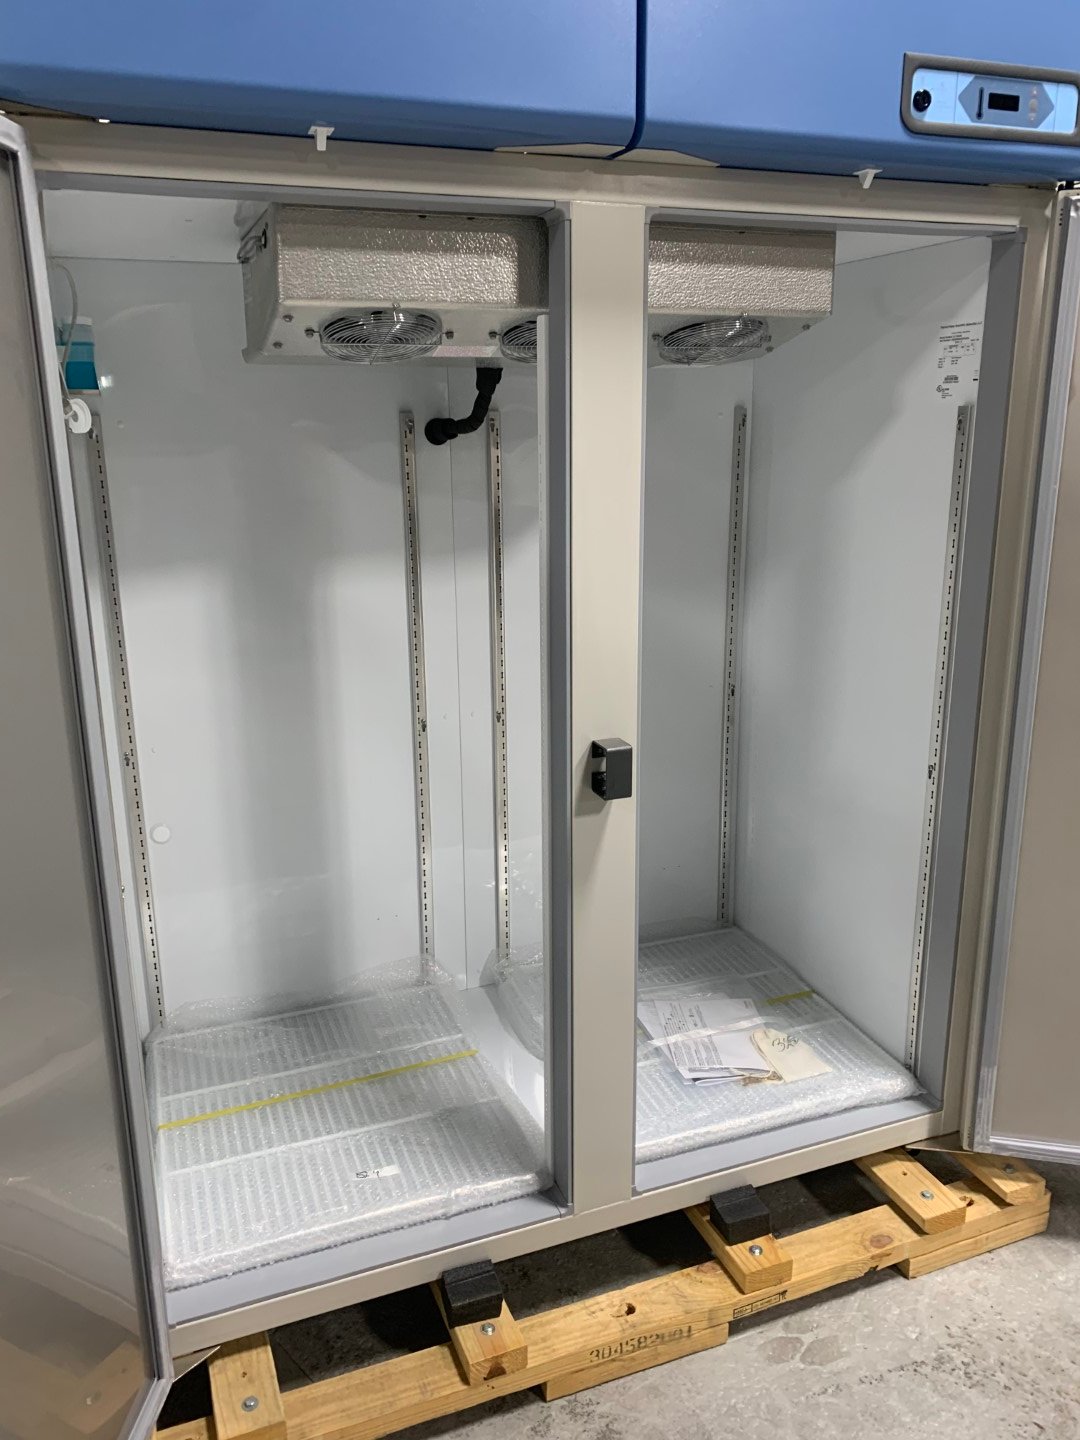 51.1 Cu Ft Thermo Fisher Scientific Lab Freezer, Model ULT5030A